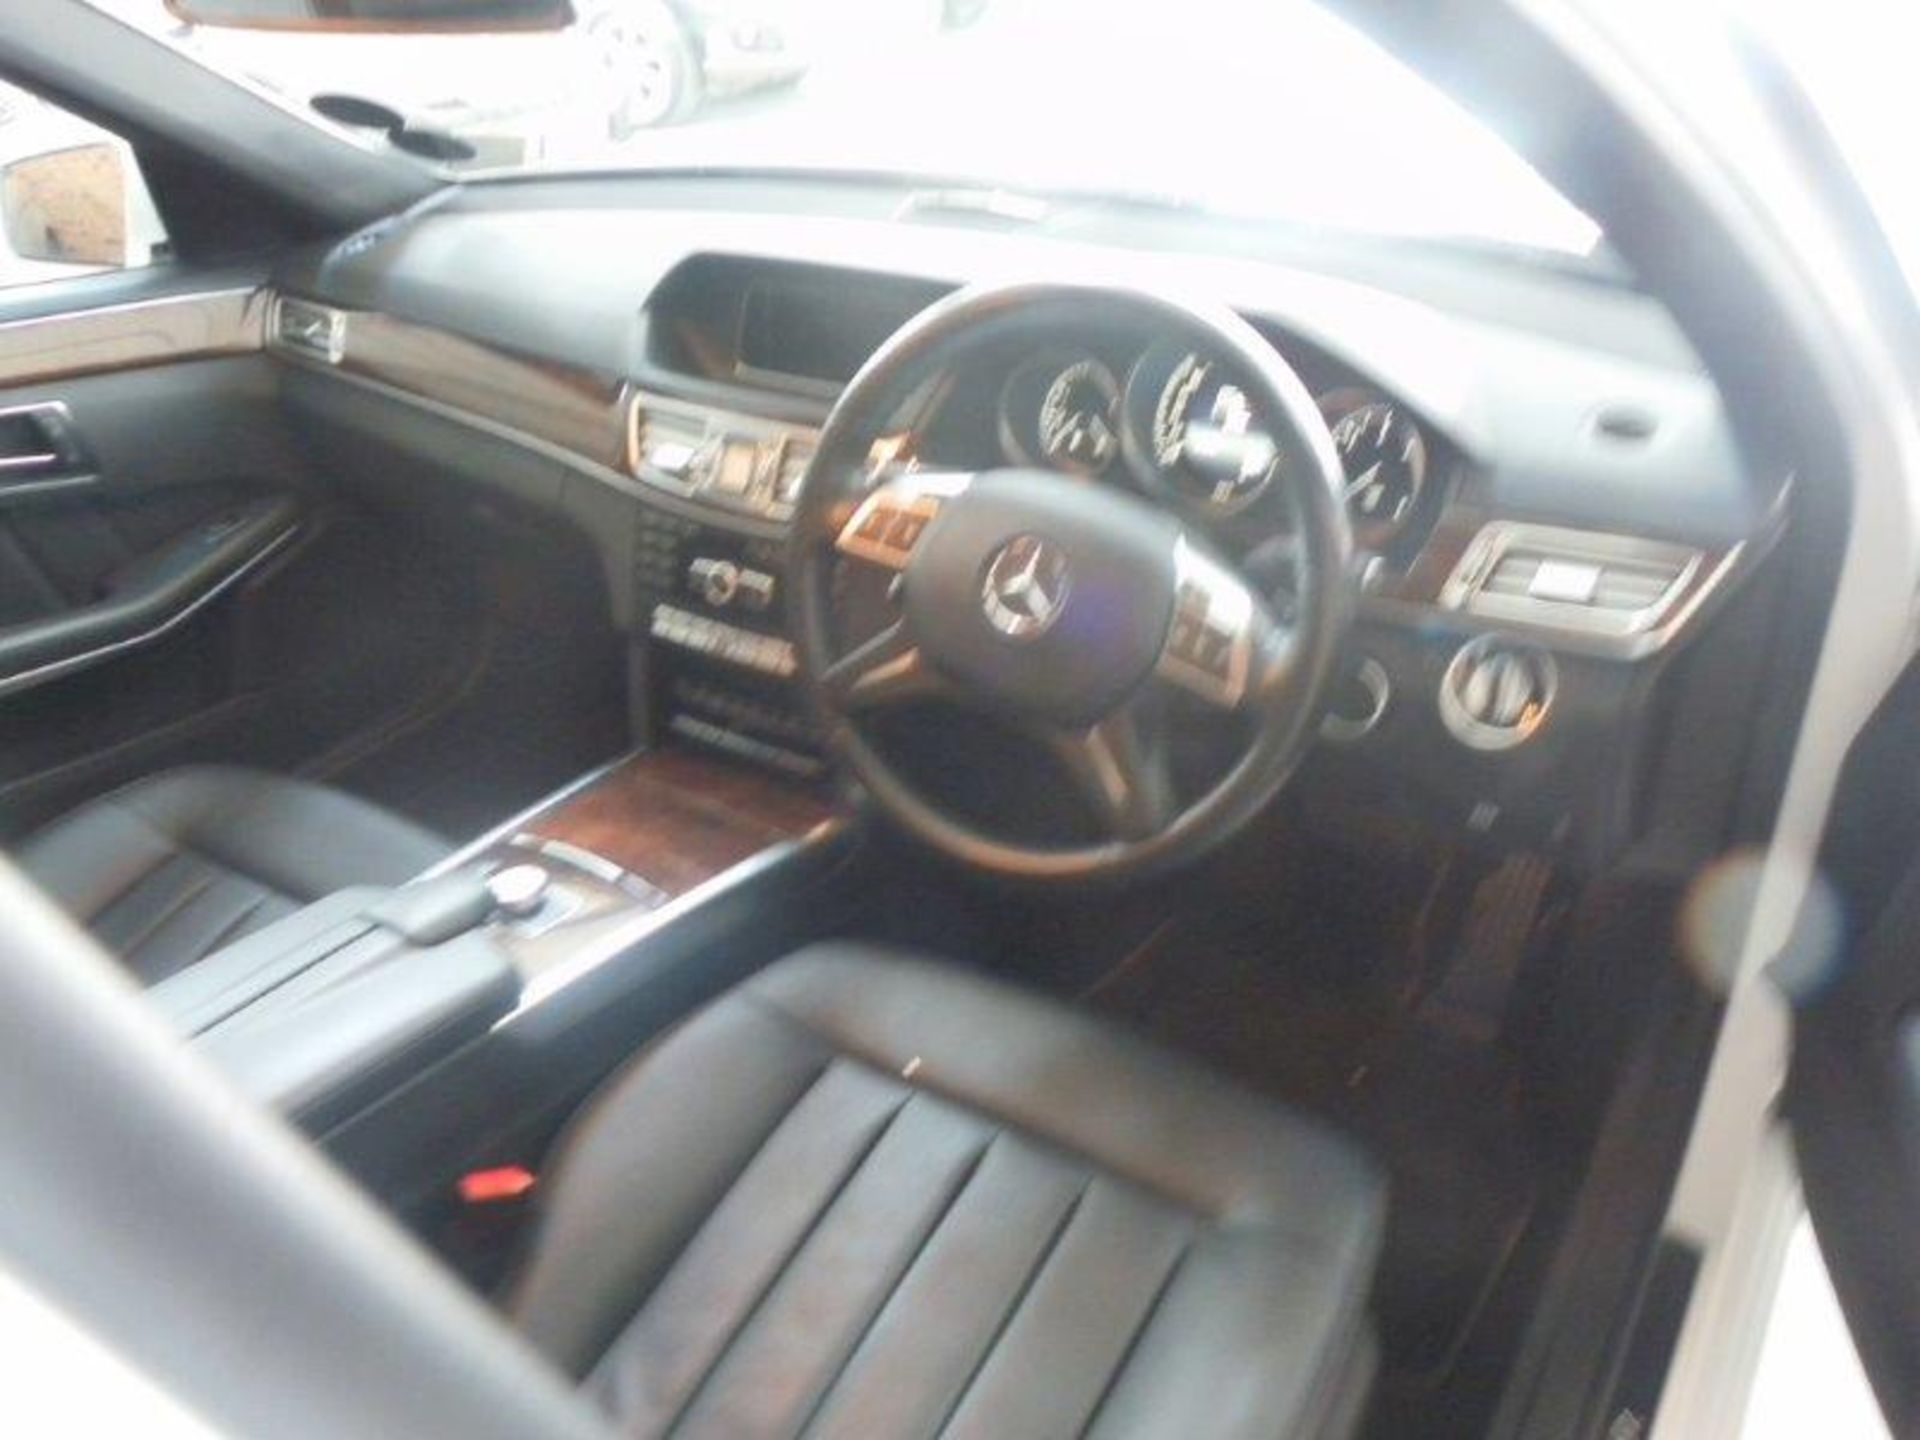 2014 DC23YGGP Mercedes-Benz E250 CDi Auto (Vin No: WDD2120032A989761 )(Black Leather, PDC) (White)( - Image 5 of 6